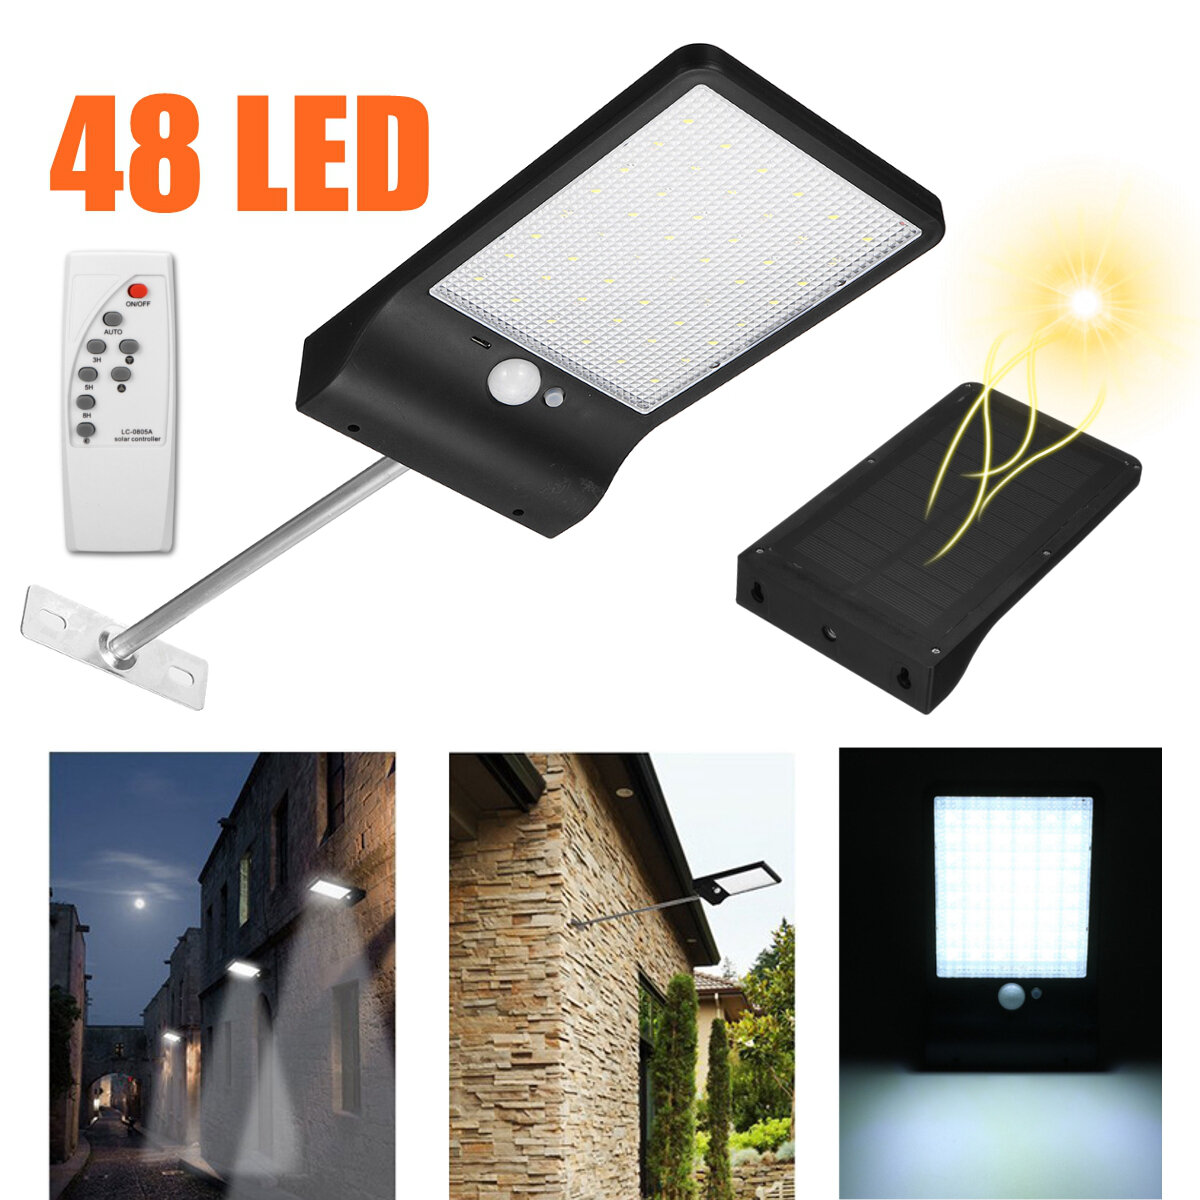 48LED Solar PIR Motion Sensor Wall Light Outdoor Yard Street Lamp+Remote Control 